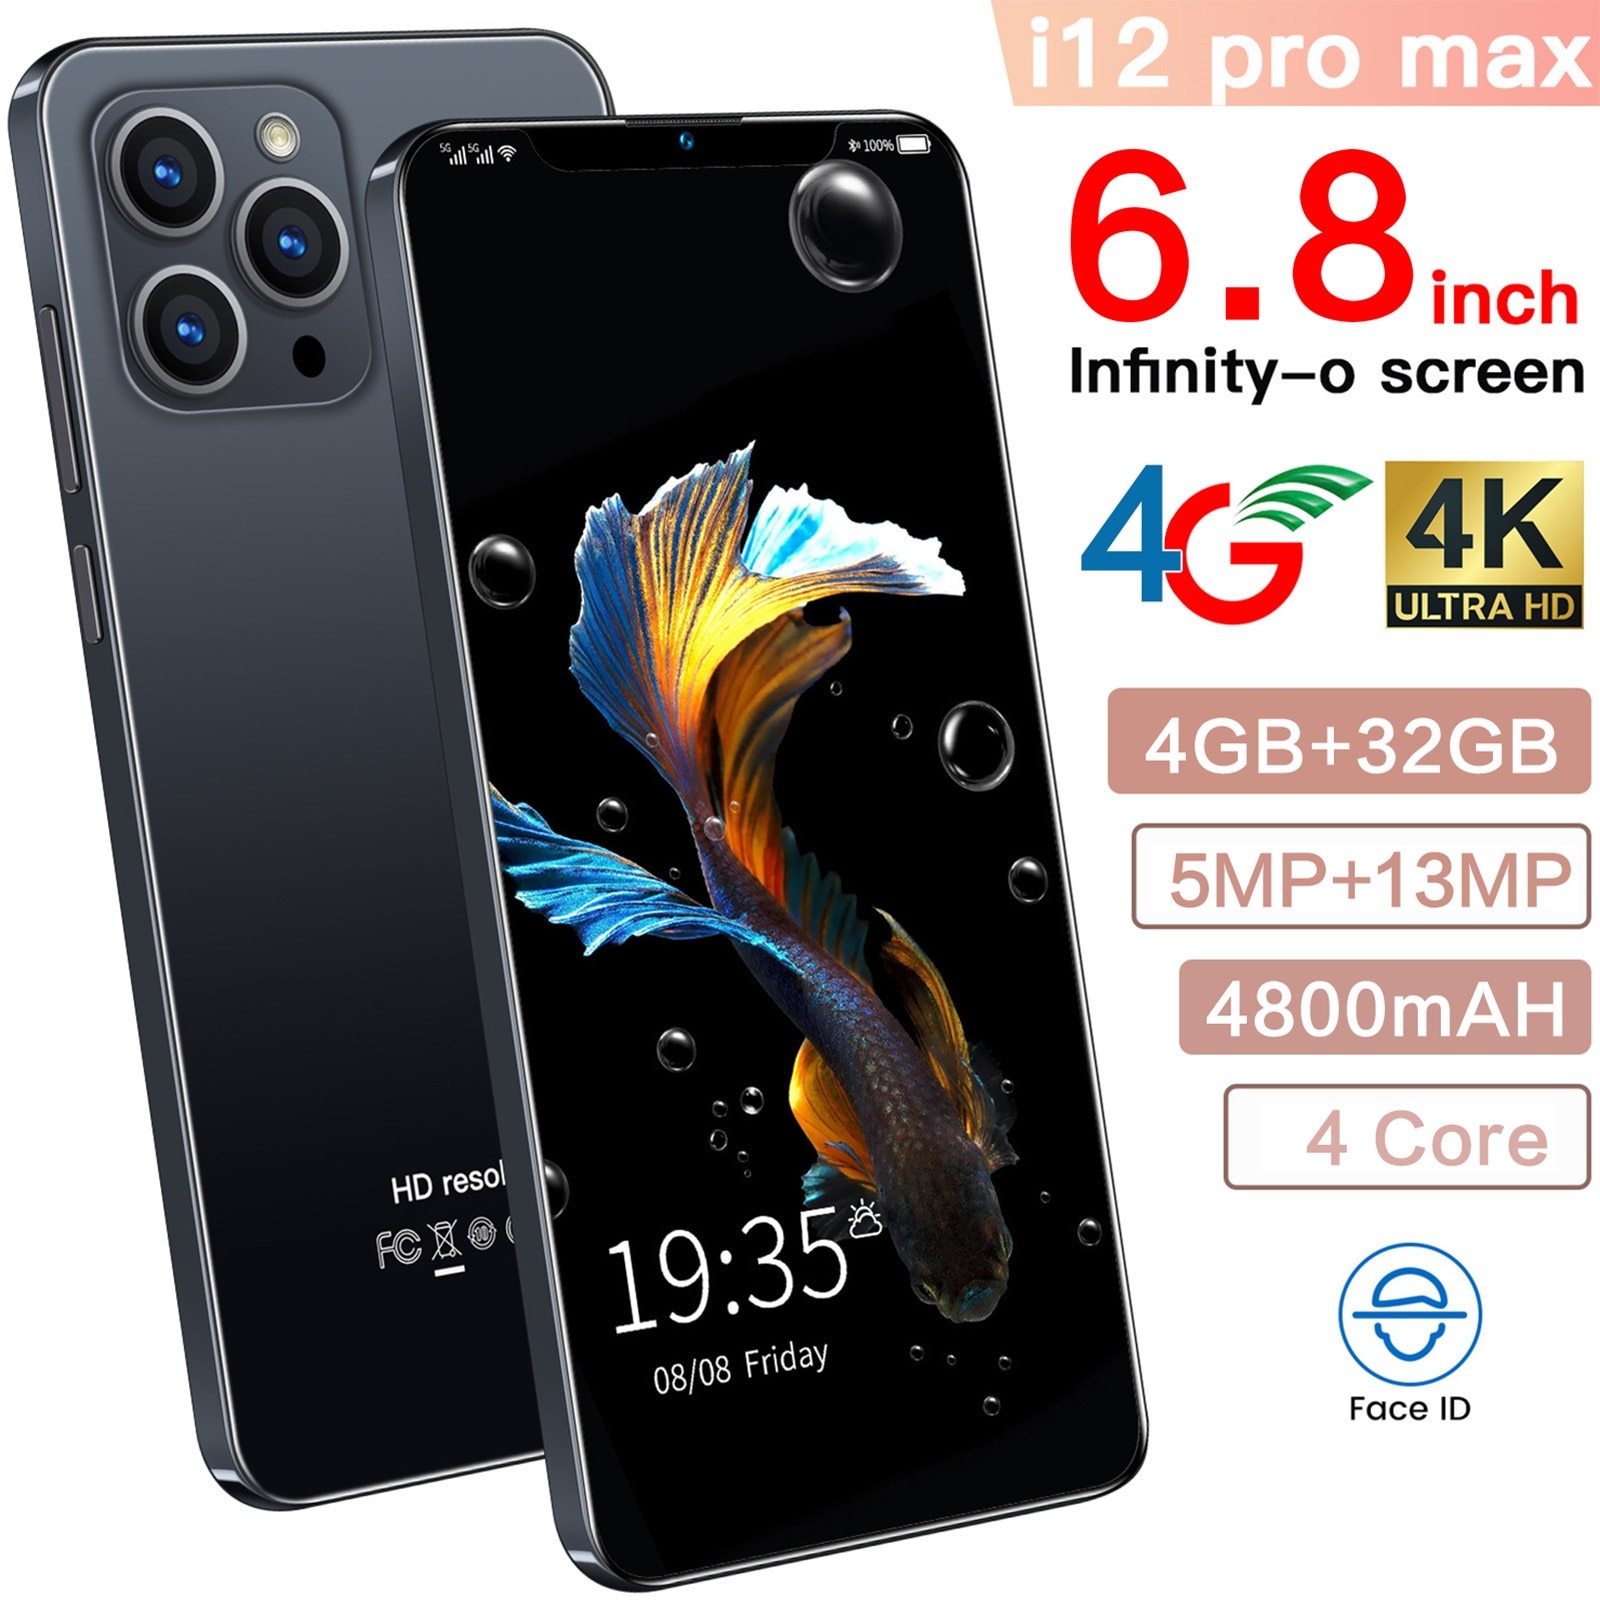 2021 Smartphones I12 Pro Max Smart Phone Unlocked Android 4+32G RAM 6.8